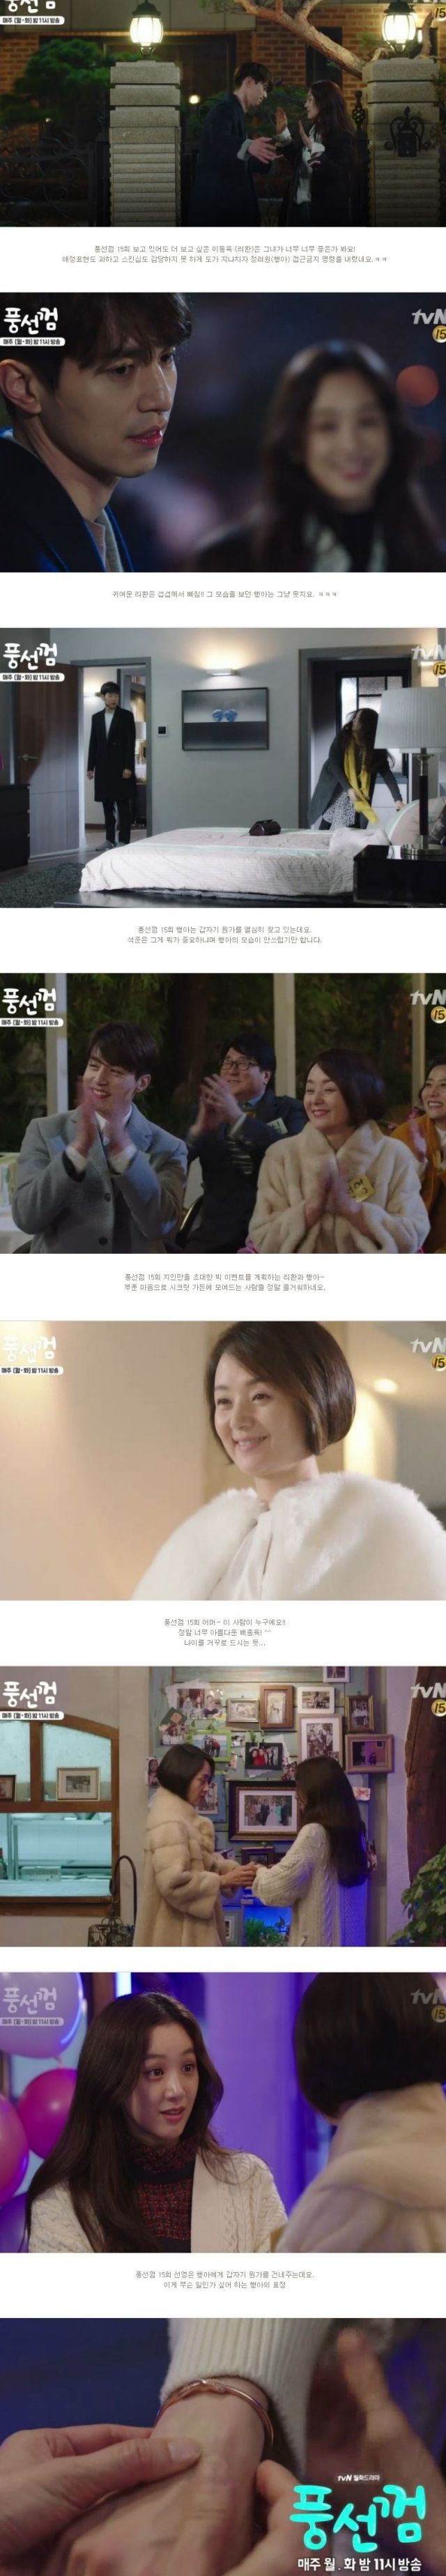 episode 15 captures for the Korean drama 'Bubble Gum'